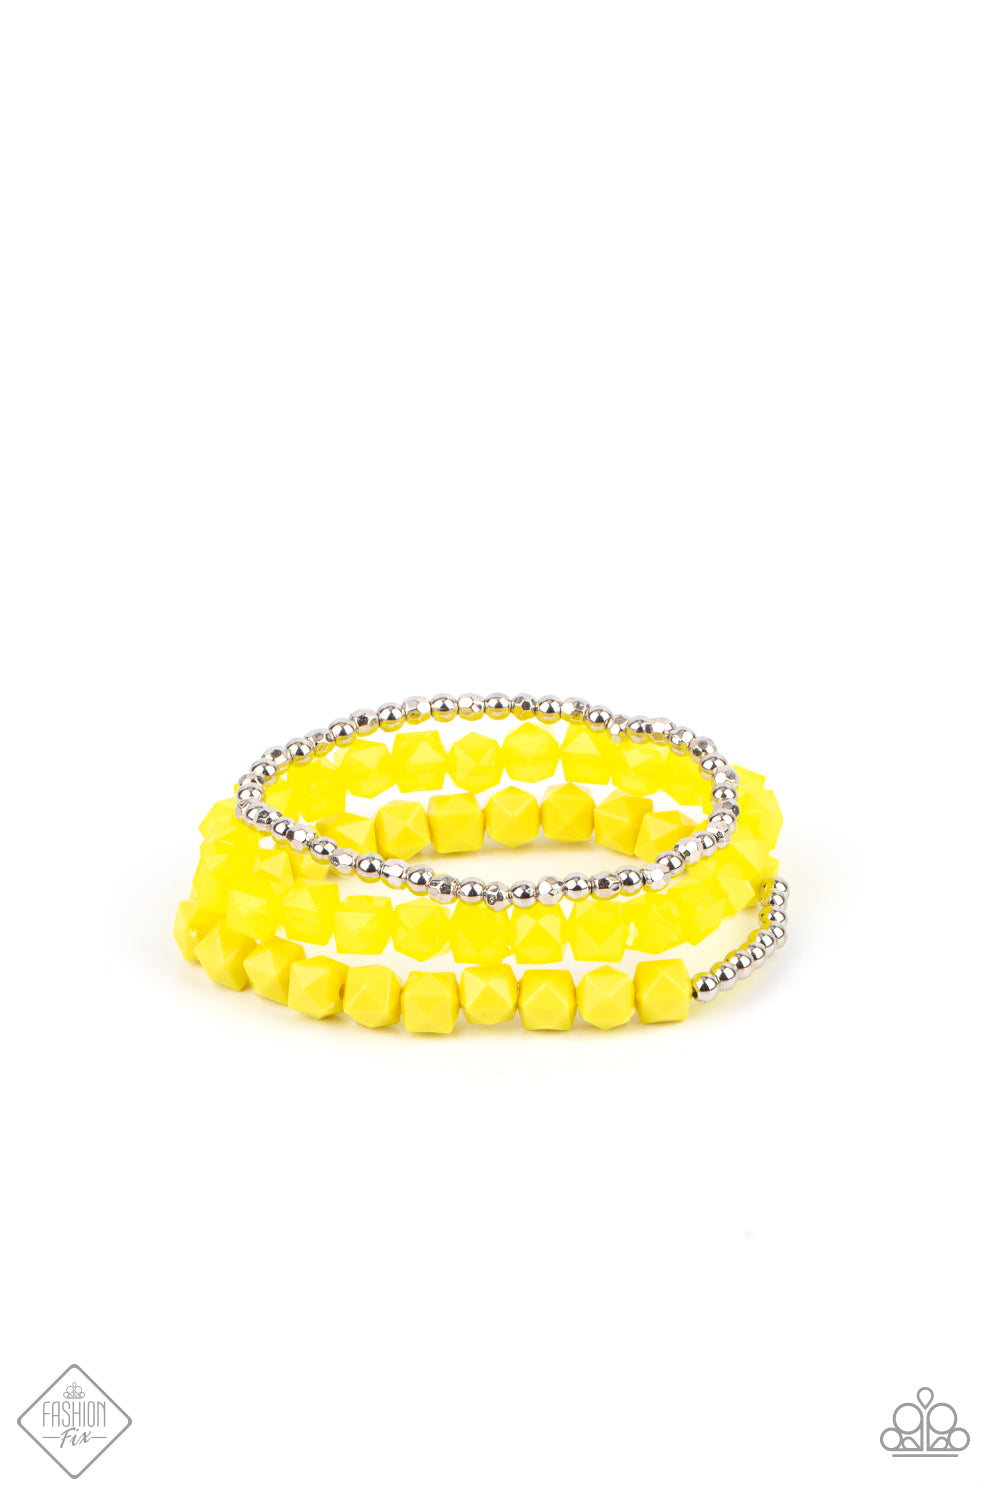 Vacay Vagabond Yellow
Bracelet - Daria's Blings N Things